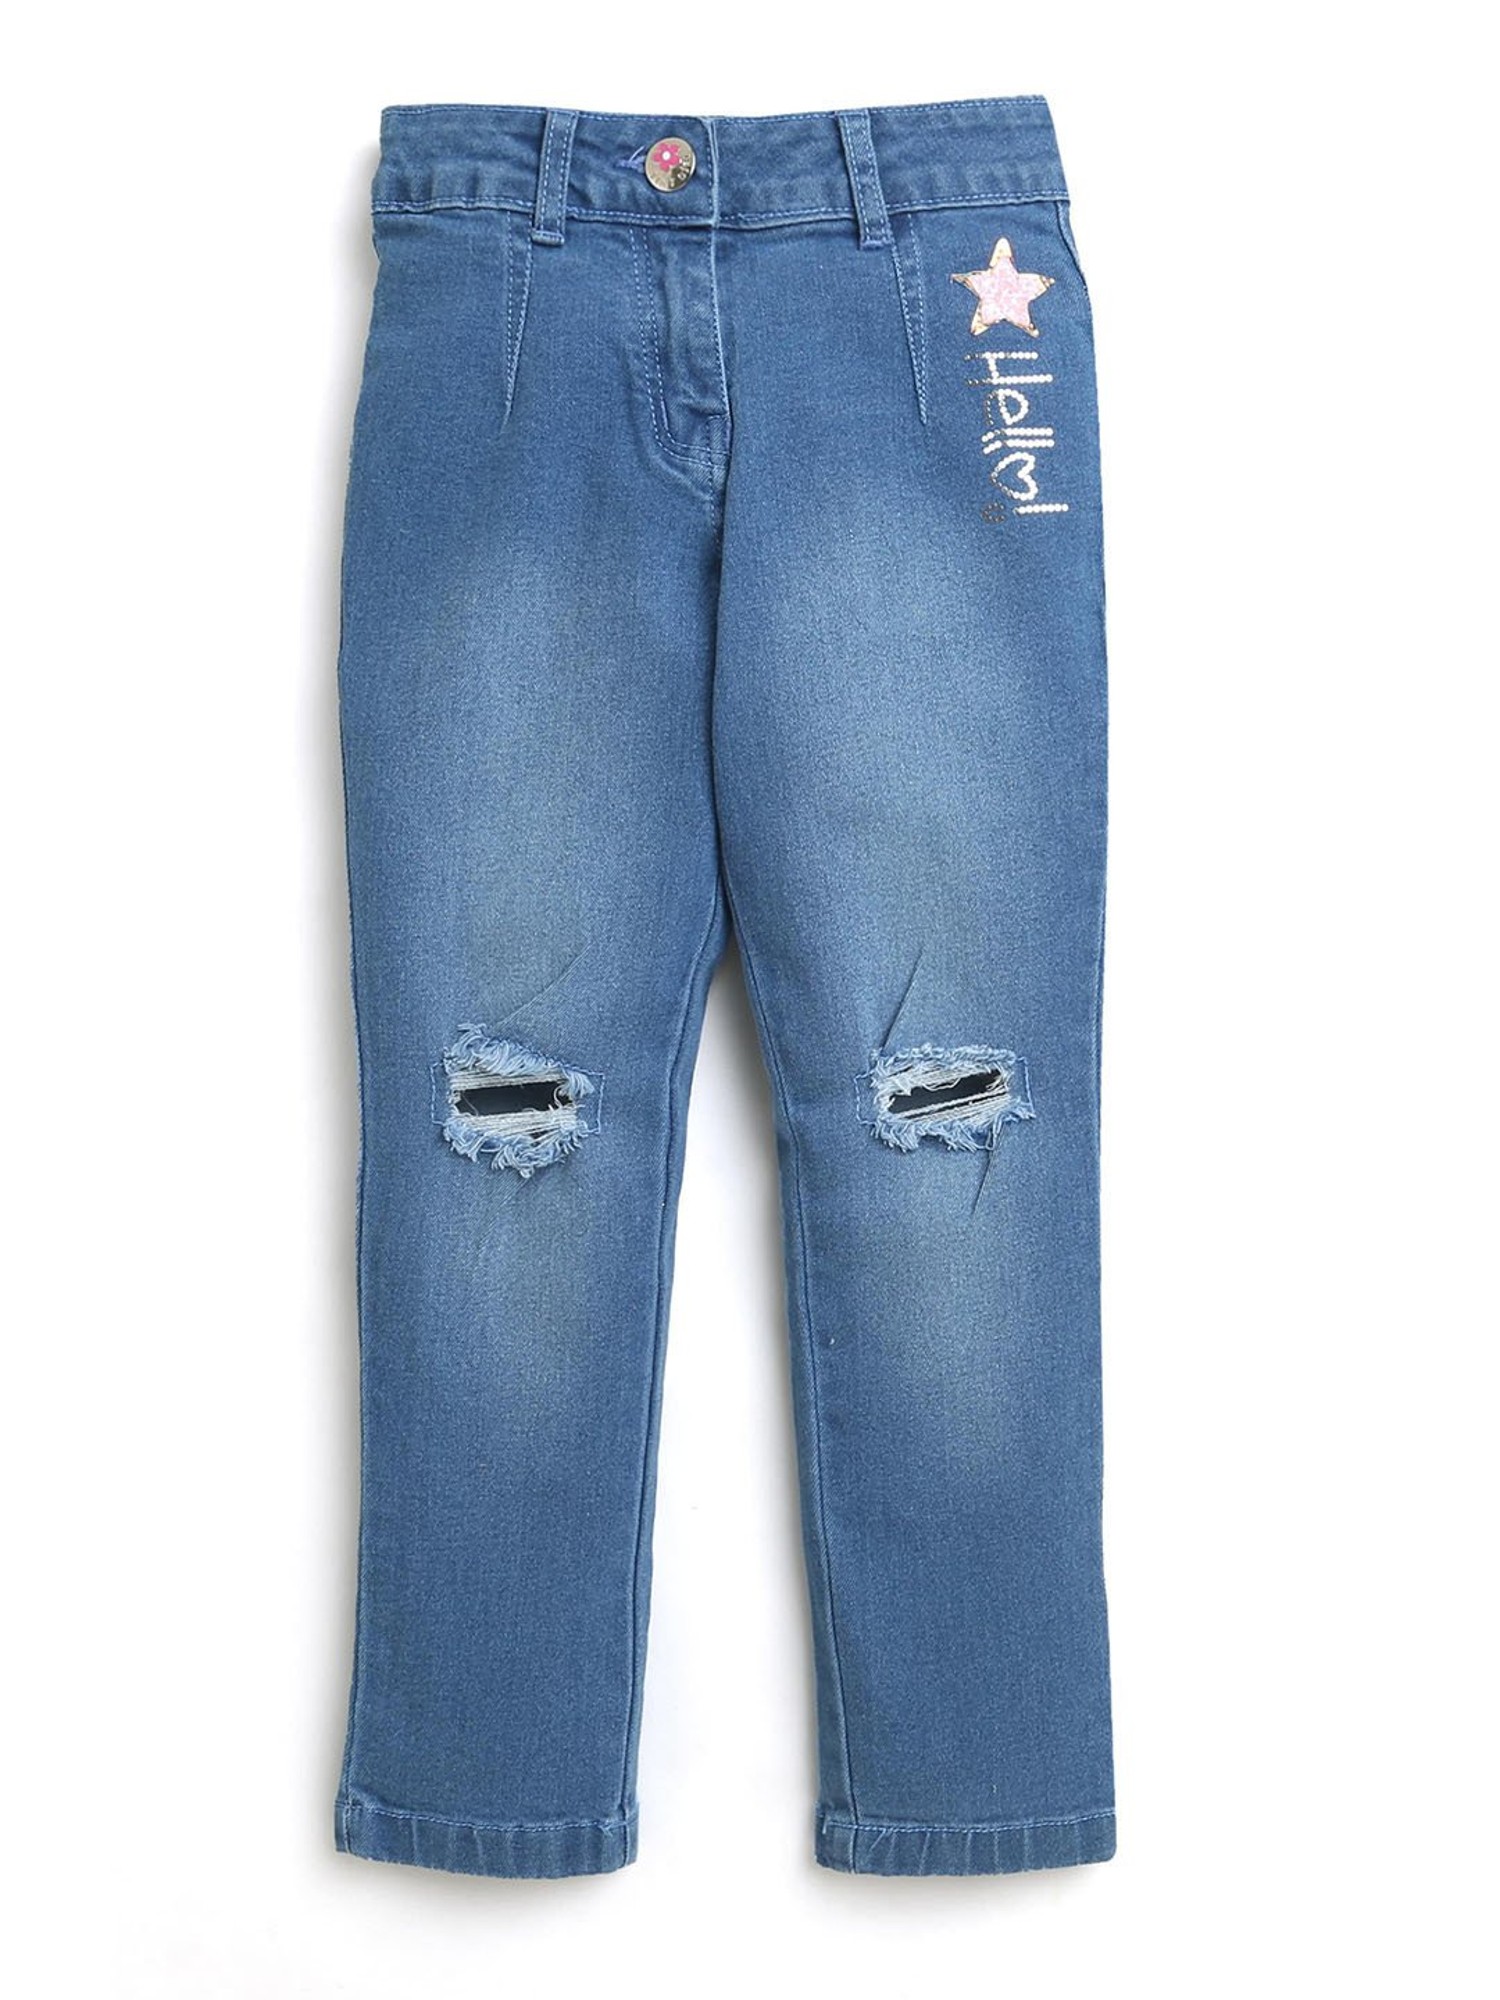 Ribbon Design Ripped Jeans Girls Fashion Denim Pants - Chubibi-nextbuild.com.vn